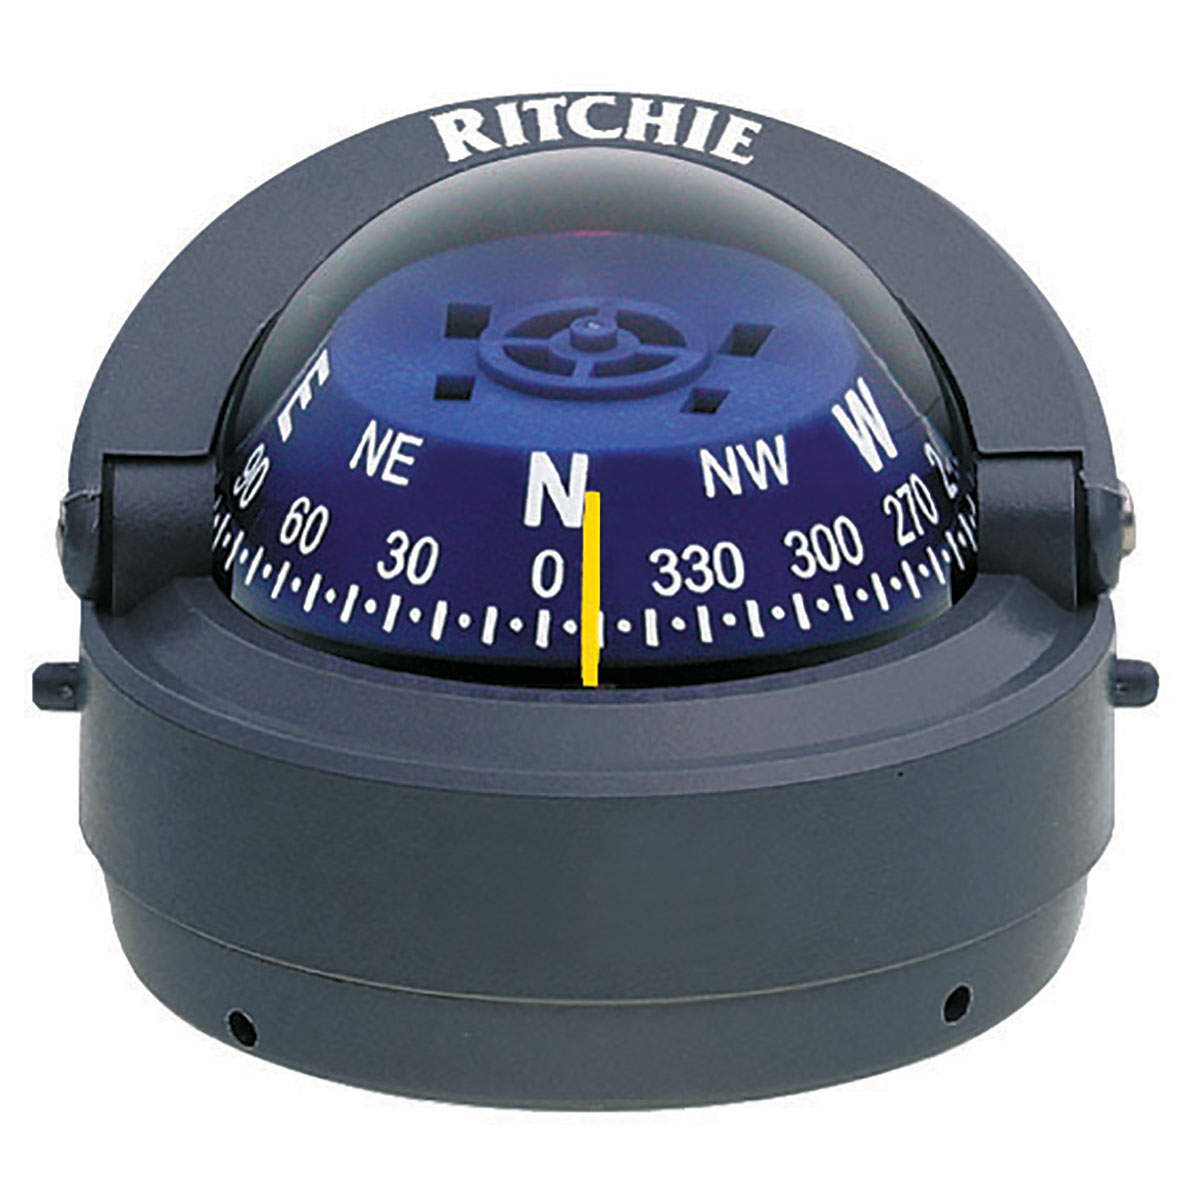 NEW Ritchie Explorer F-50W Flush Mount Marine Sailboat Power Boat Compass